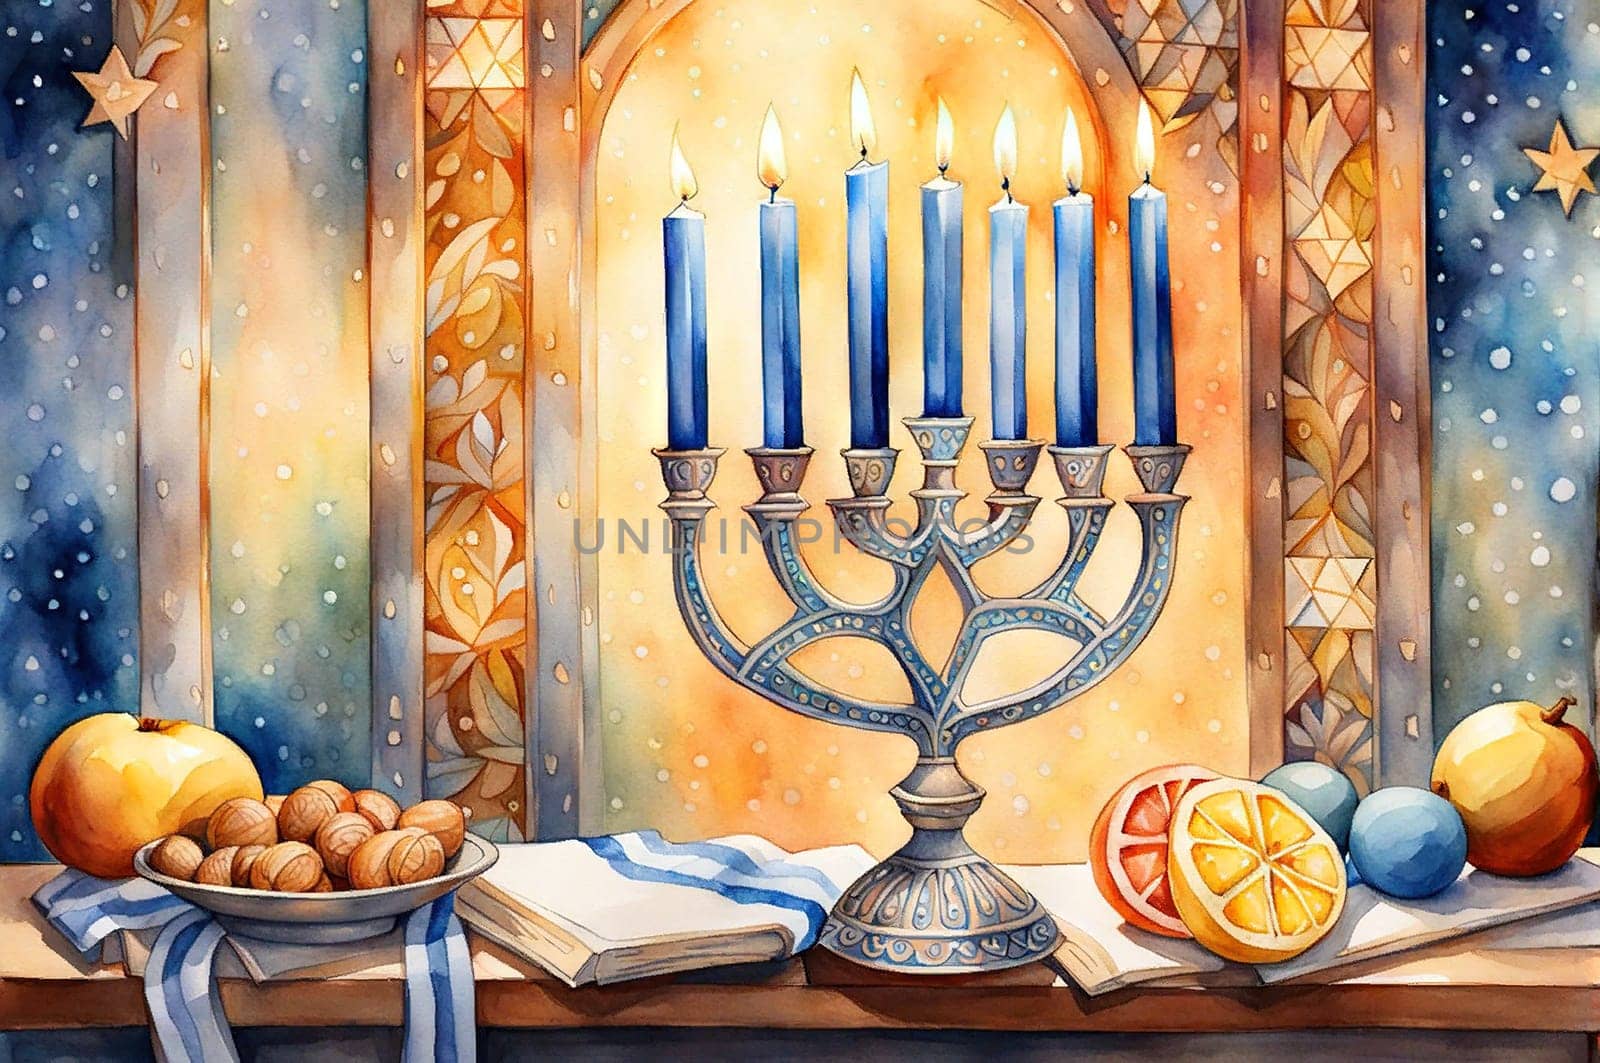 Concept jewish religious holiday hanukkah with glittering raditional chandelier by EkaterinaPereslavtseva